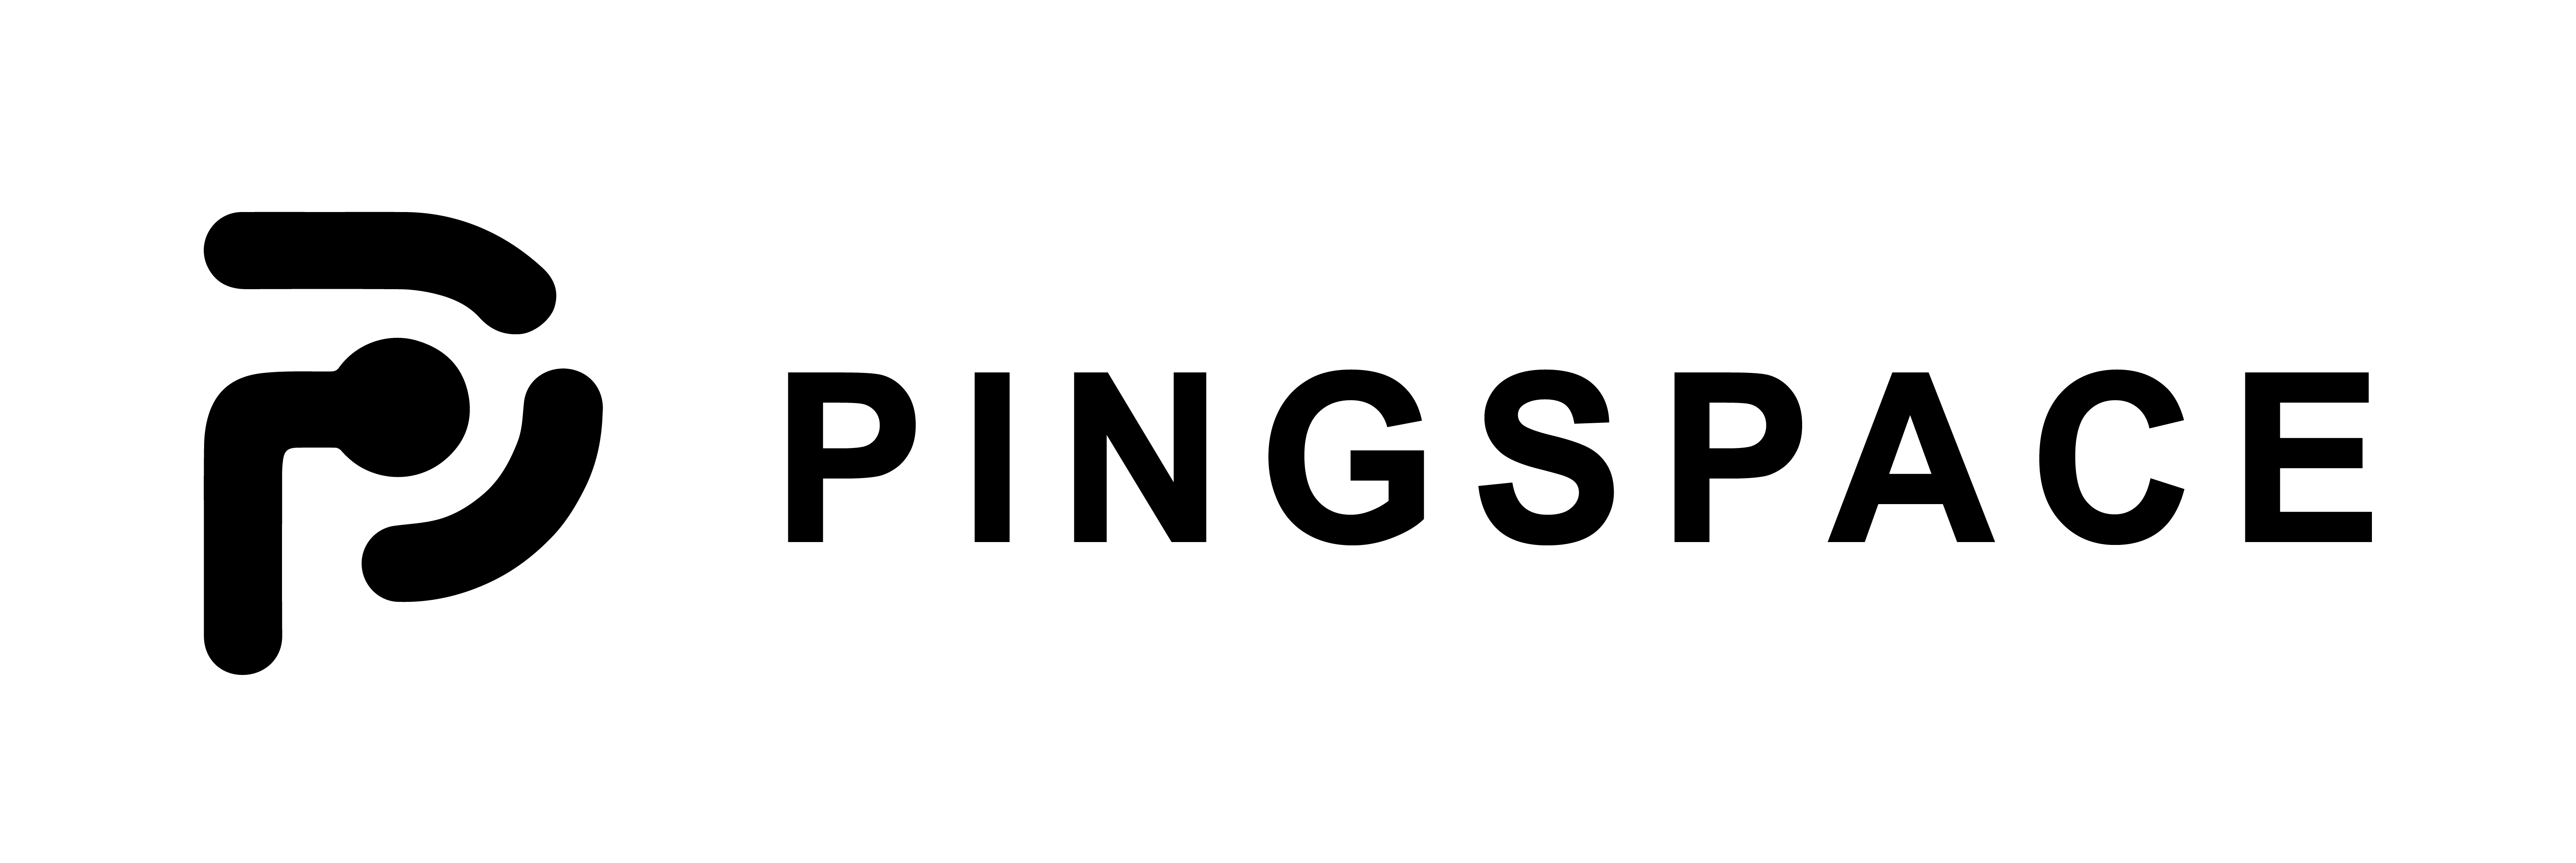 Pingspace logo